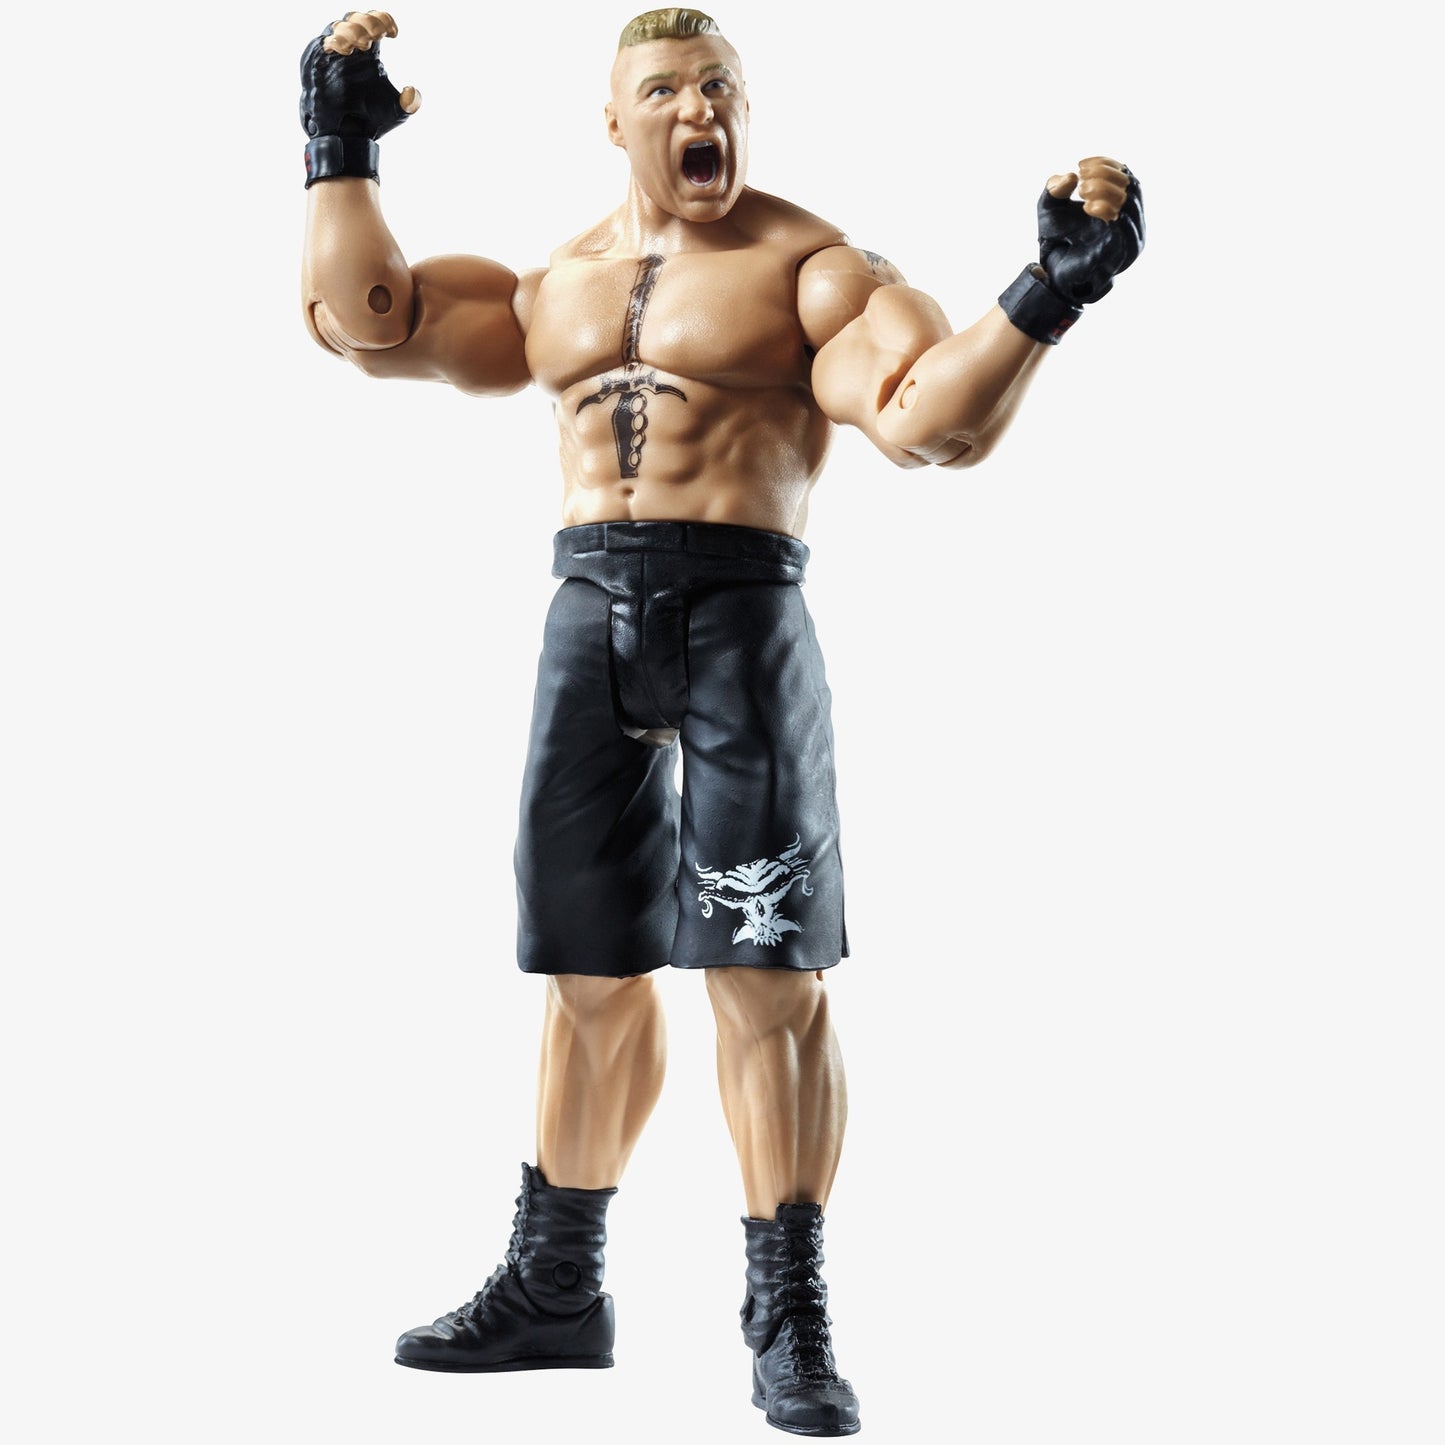 Brock Lesnar - WWE Superstar Series #60 Action Figure